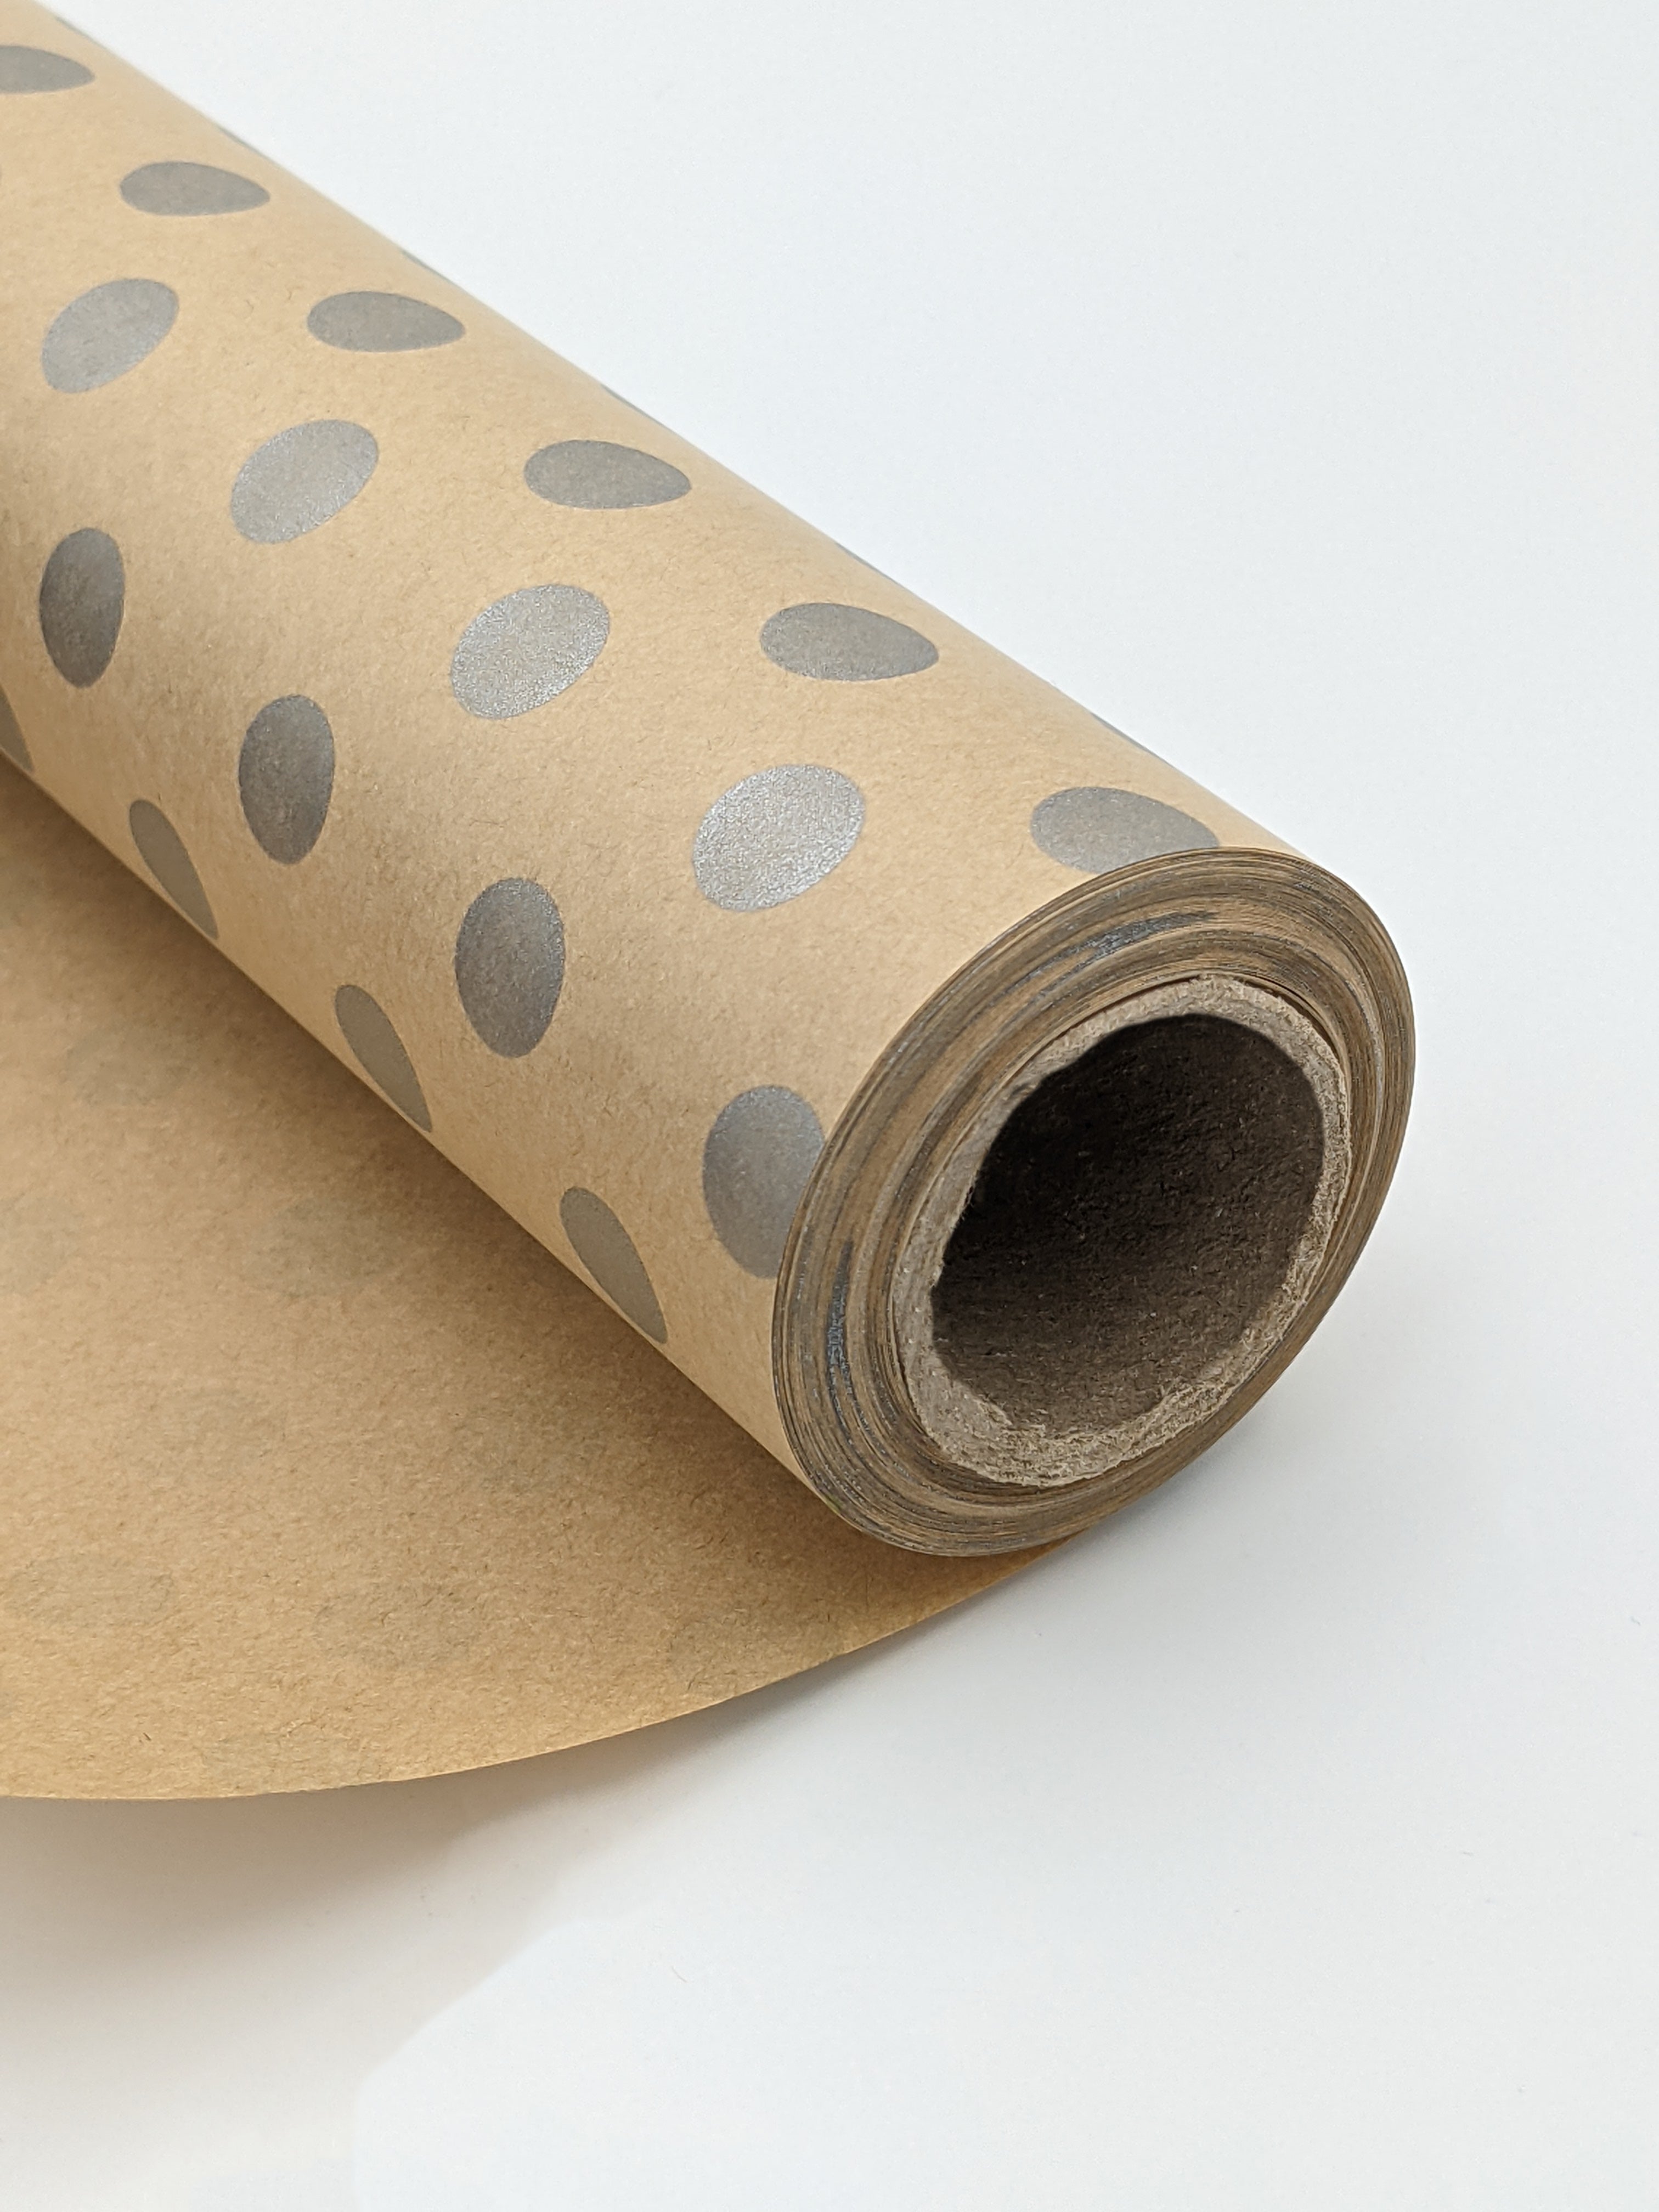 Kraft Polka Dot Wrapping Paper